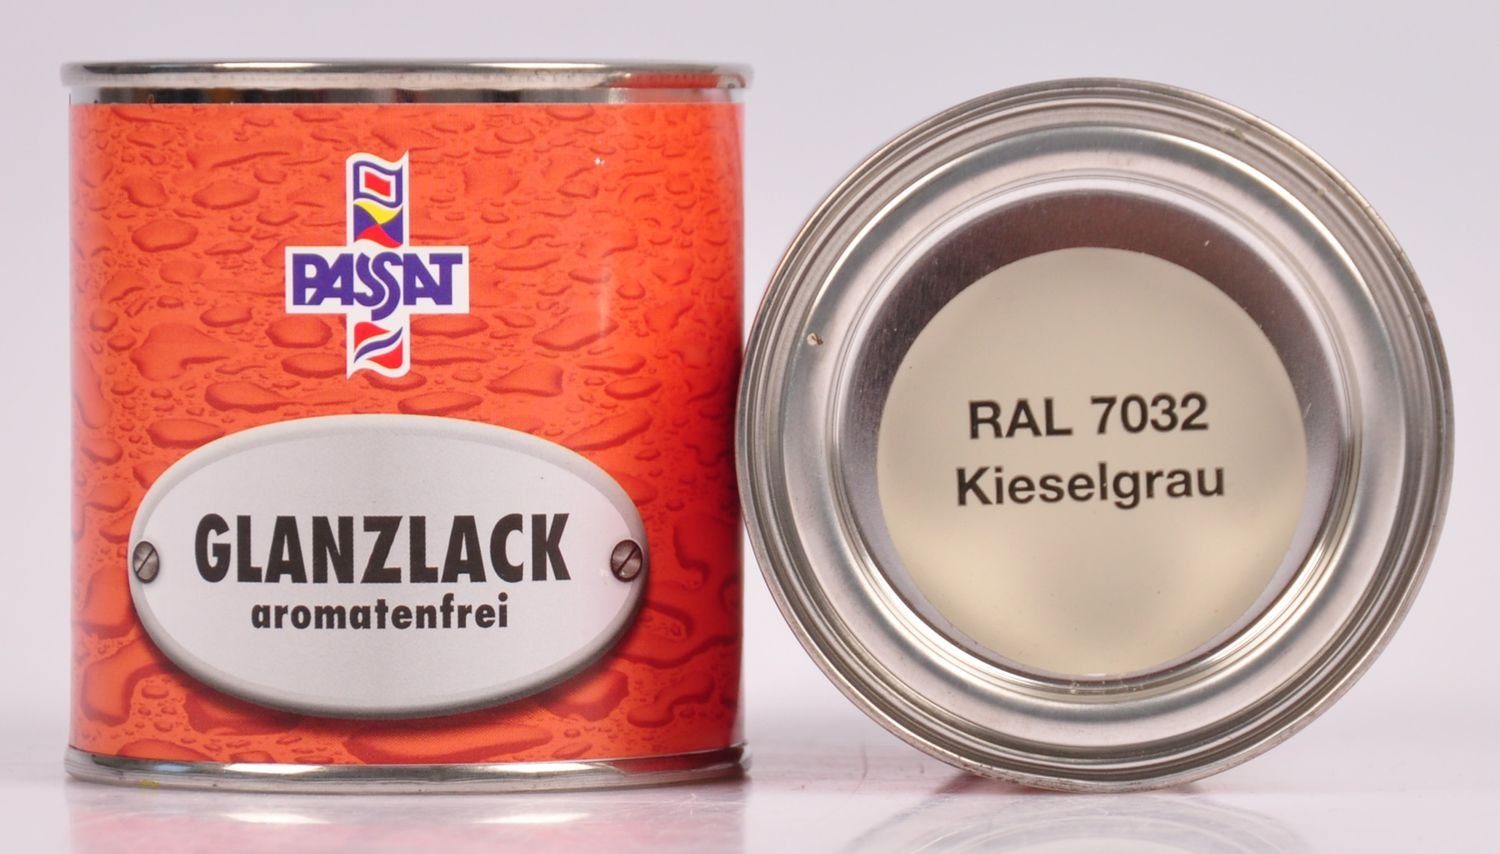 kieselgrau Glanzlack und Passat Meffert Holzfarbe Abtönfarbe RAL 7032 Farbwerke AG glänzend Lack 3x 250ml Vollton-